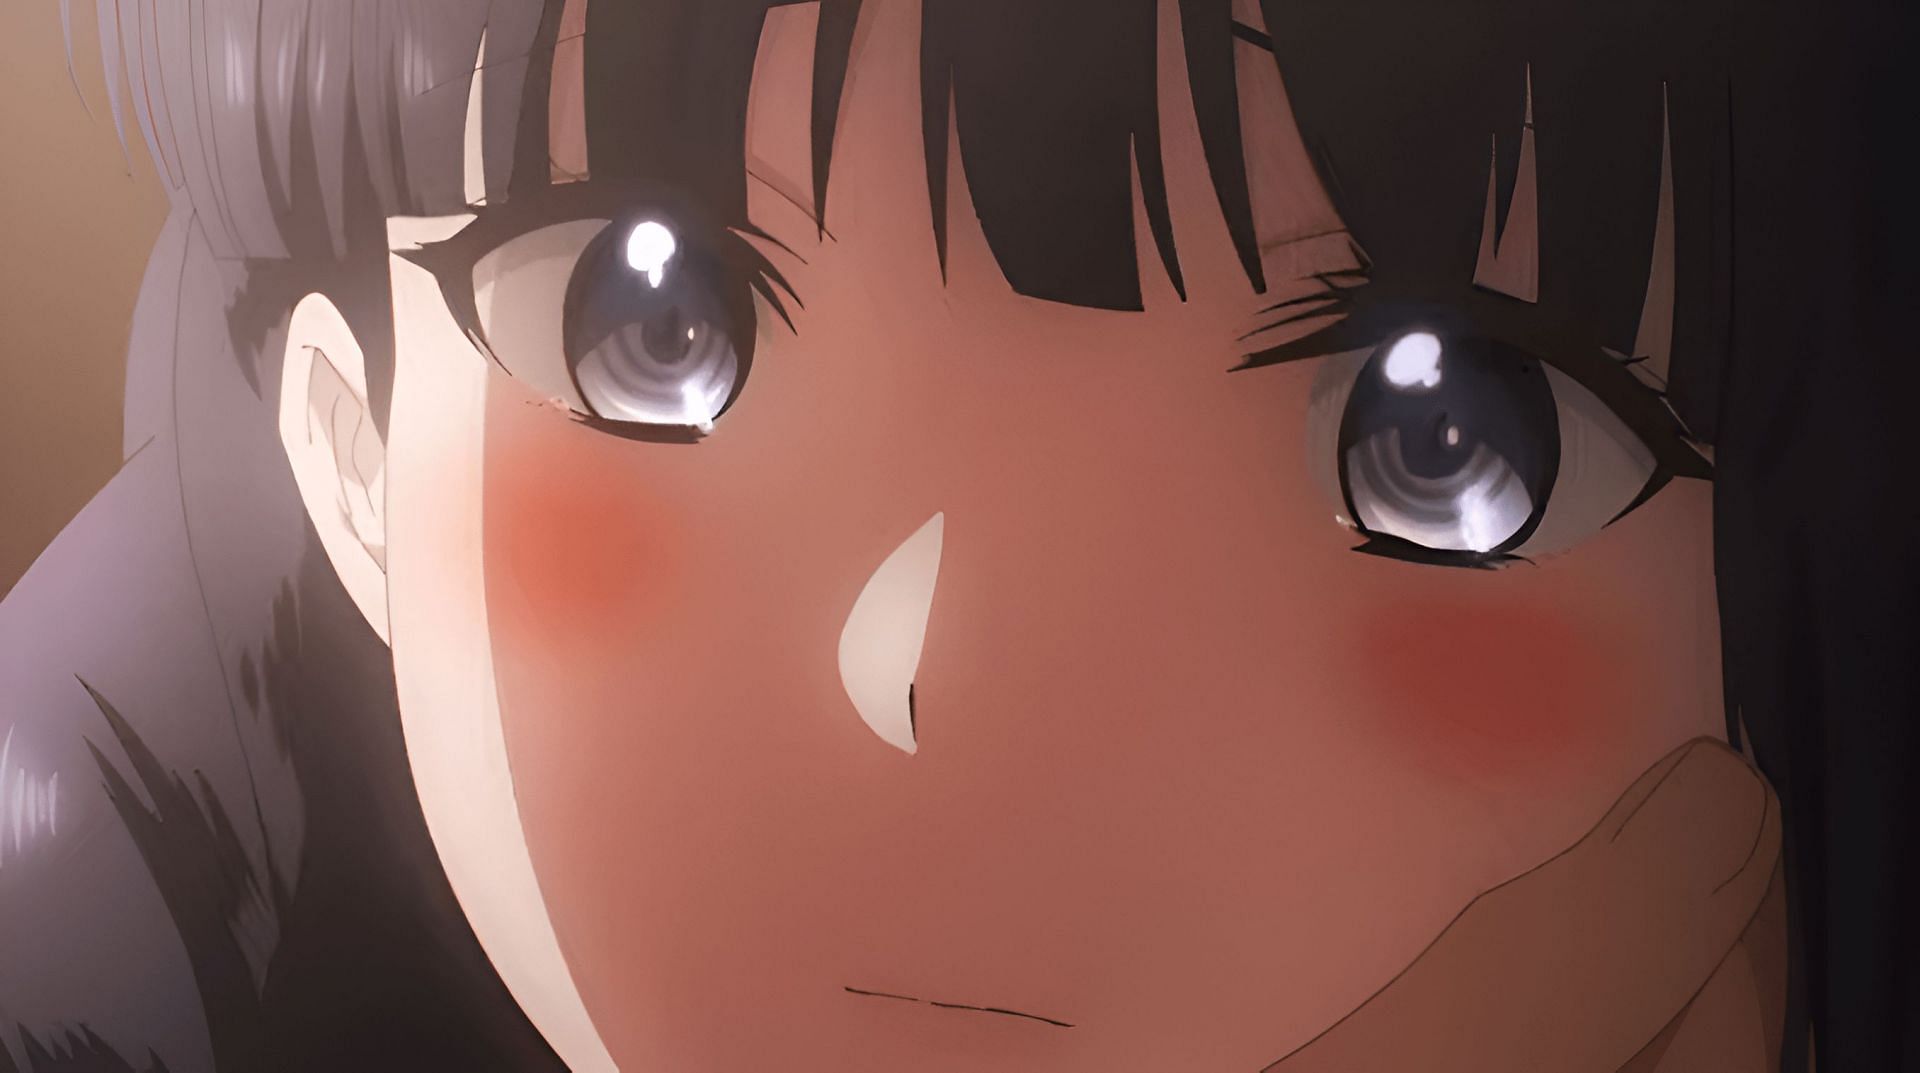 Miyuki Shiba as seen in the anime (Image via Studio eightbit)